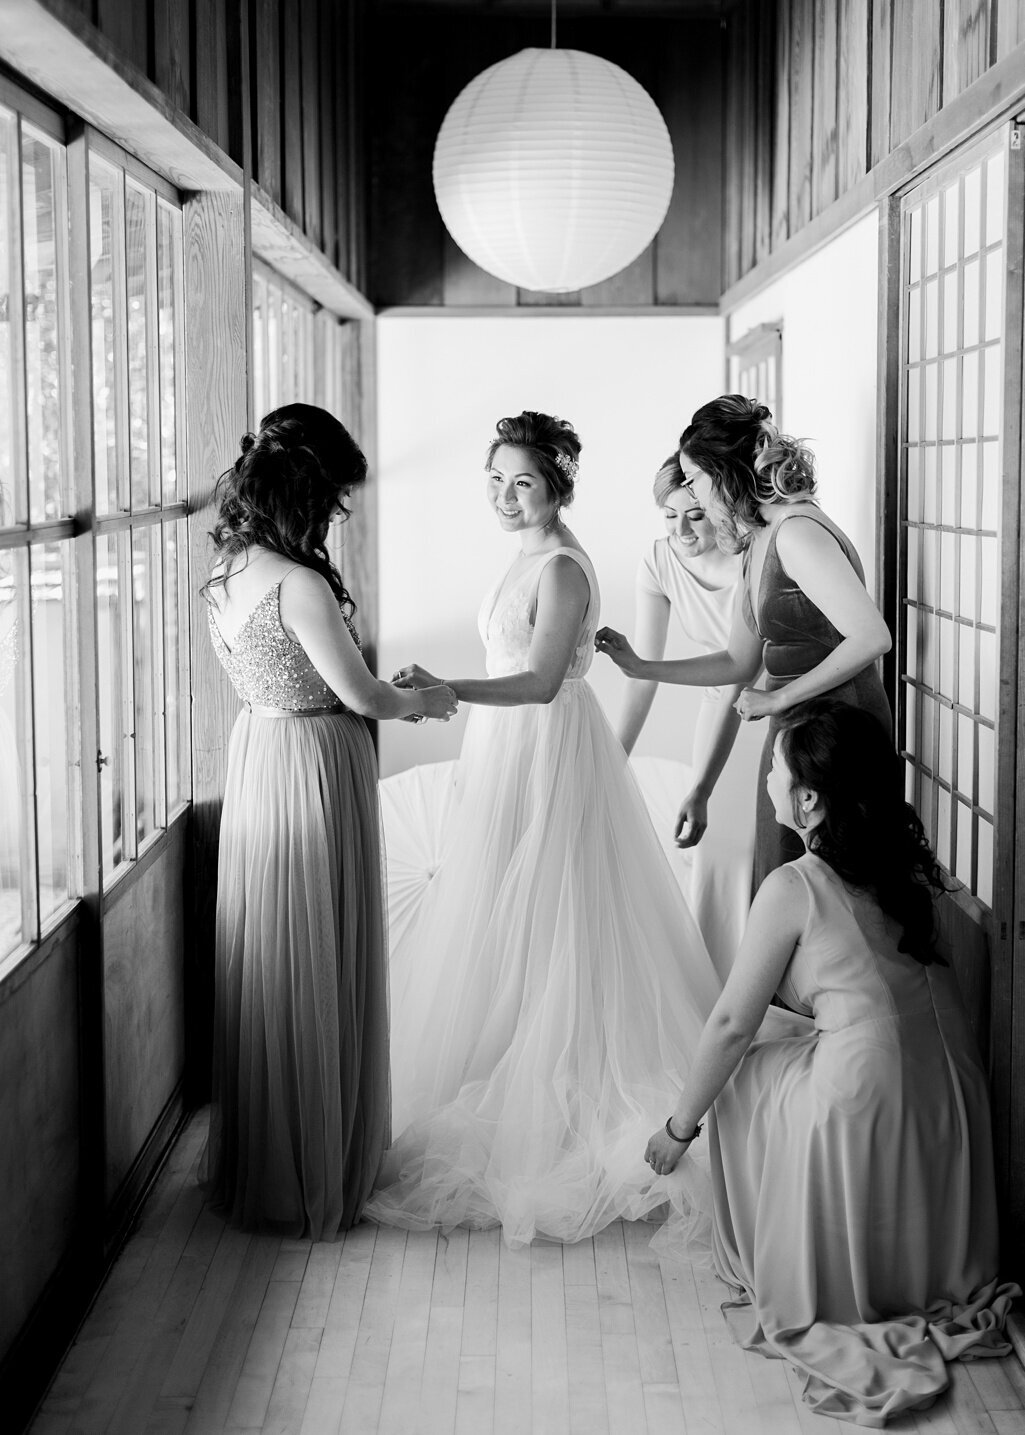 Jessie-Barksdale-Photography_Hakone-Gardens-Saratoga_San-Francisco-Bay-Area-Wedding-Photographer_0011